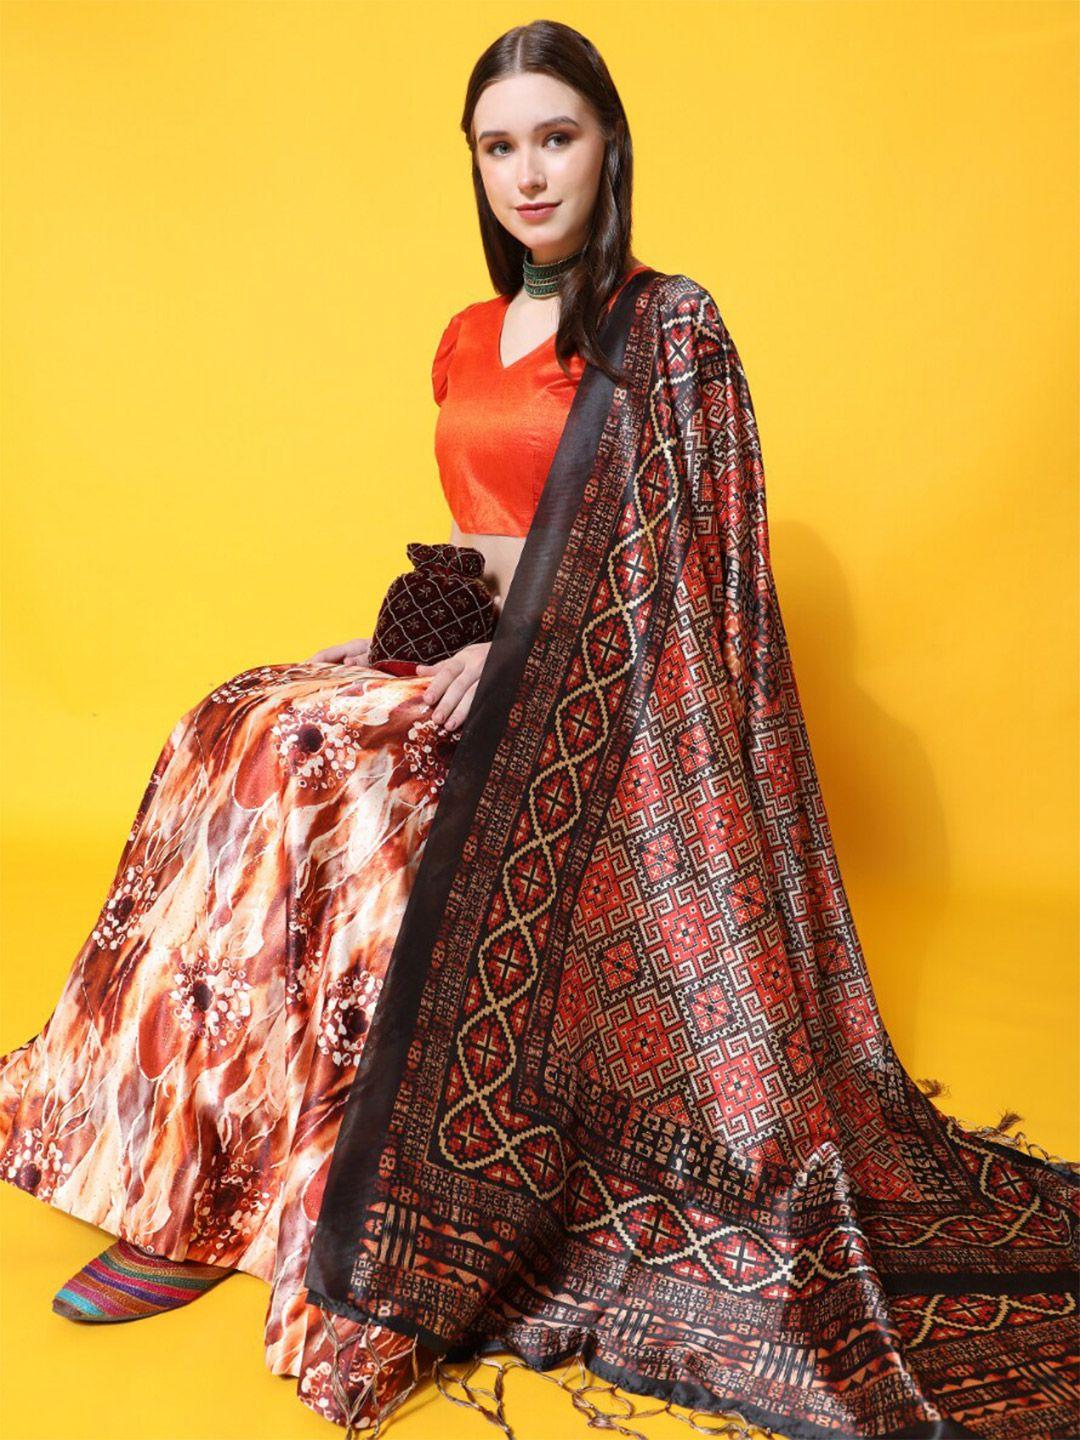 kaizen texo fab printed semi-stitched lehenga & unstitched blouse with dupatta